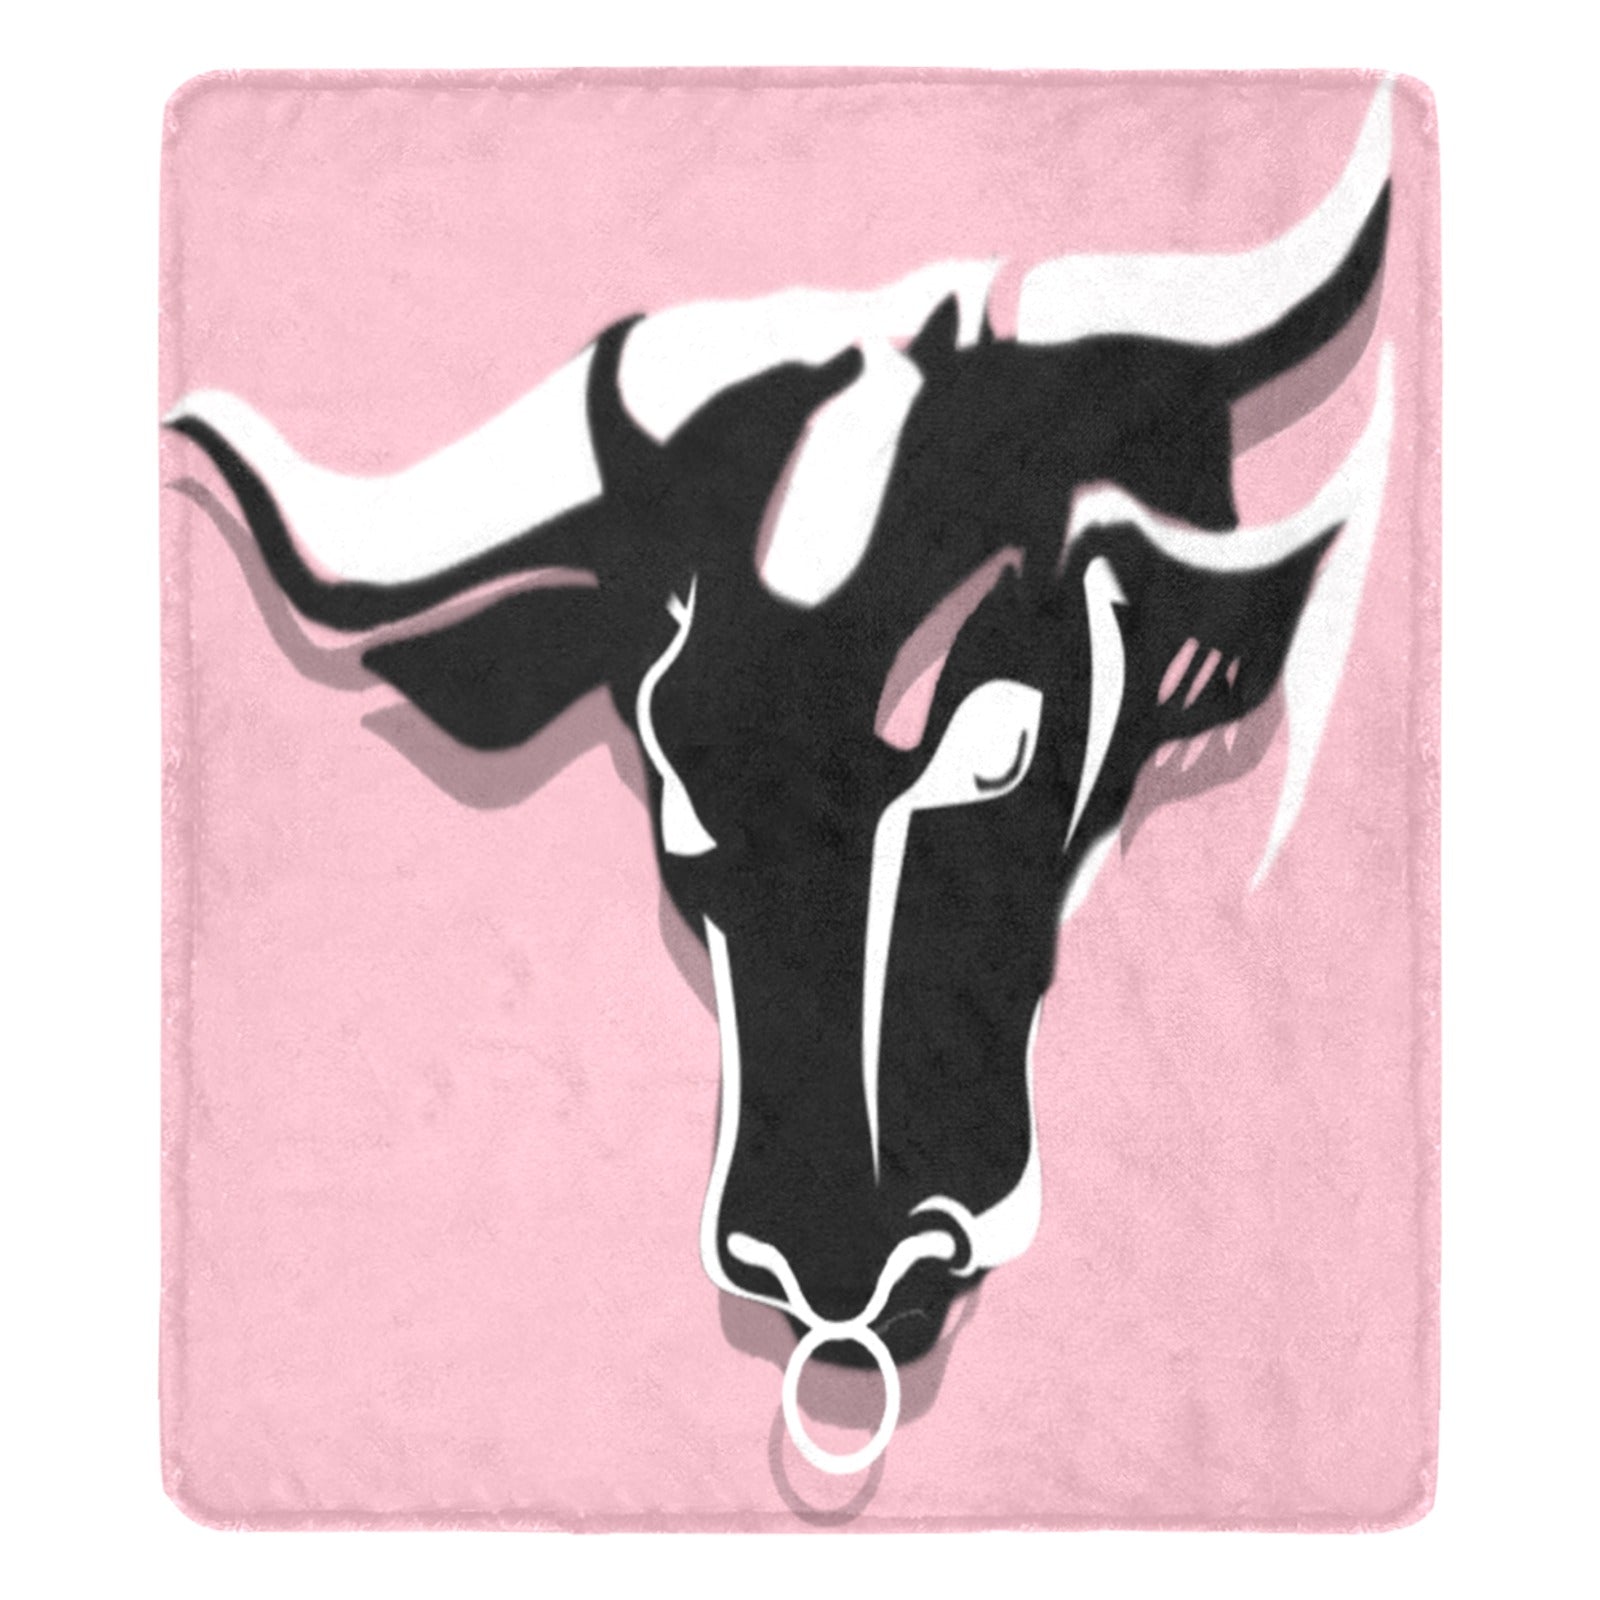 fz blanket bull (xl) one size / fz blanket - pink ultra-soft micro fleece blanket 70"x80"